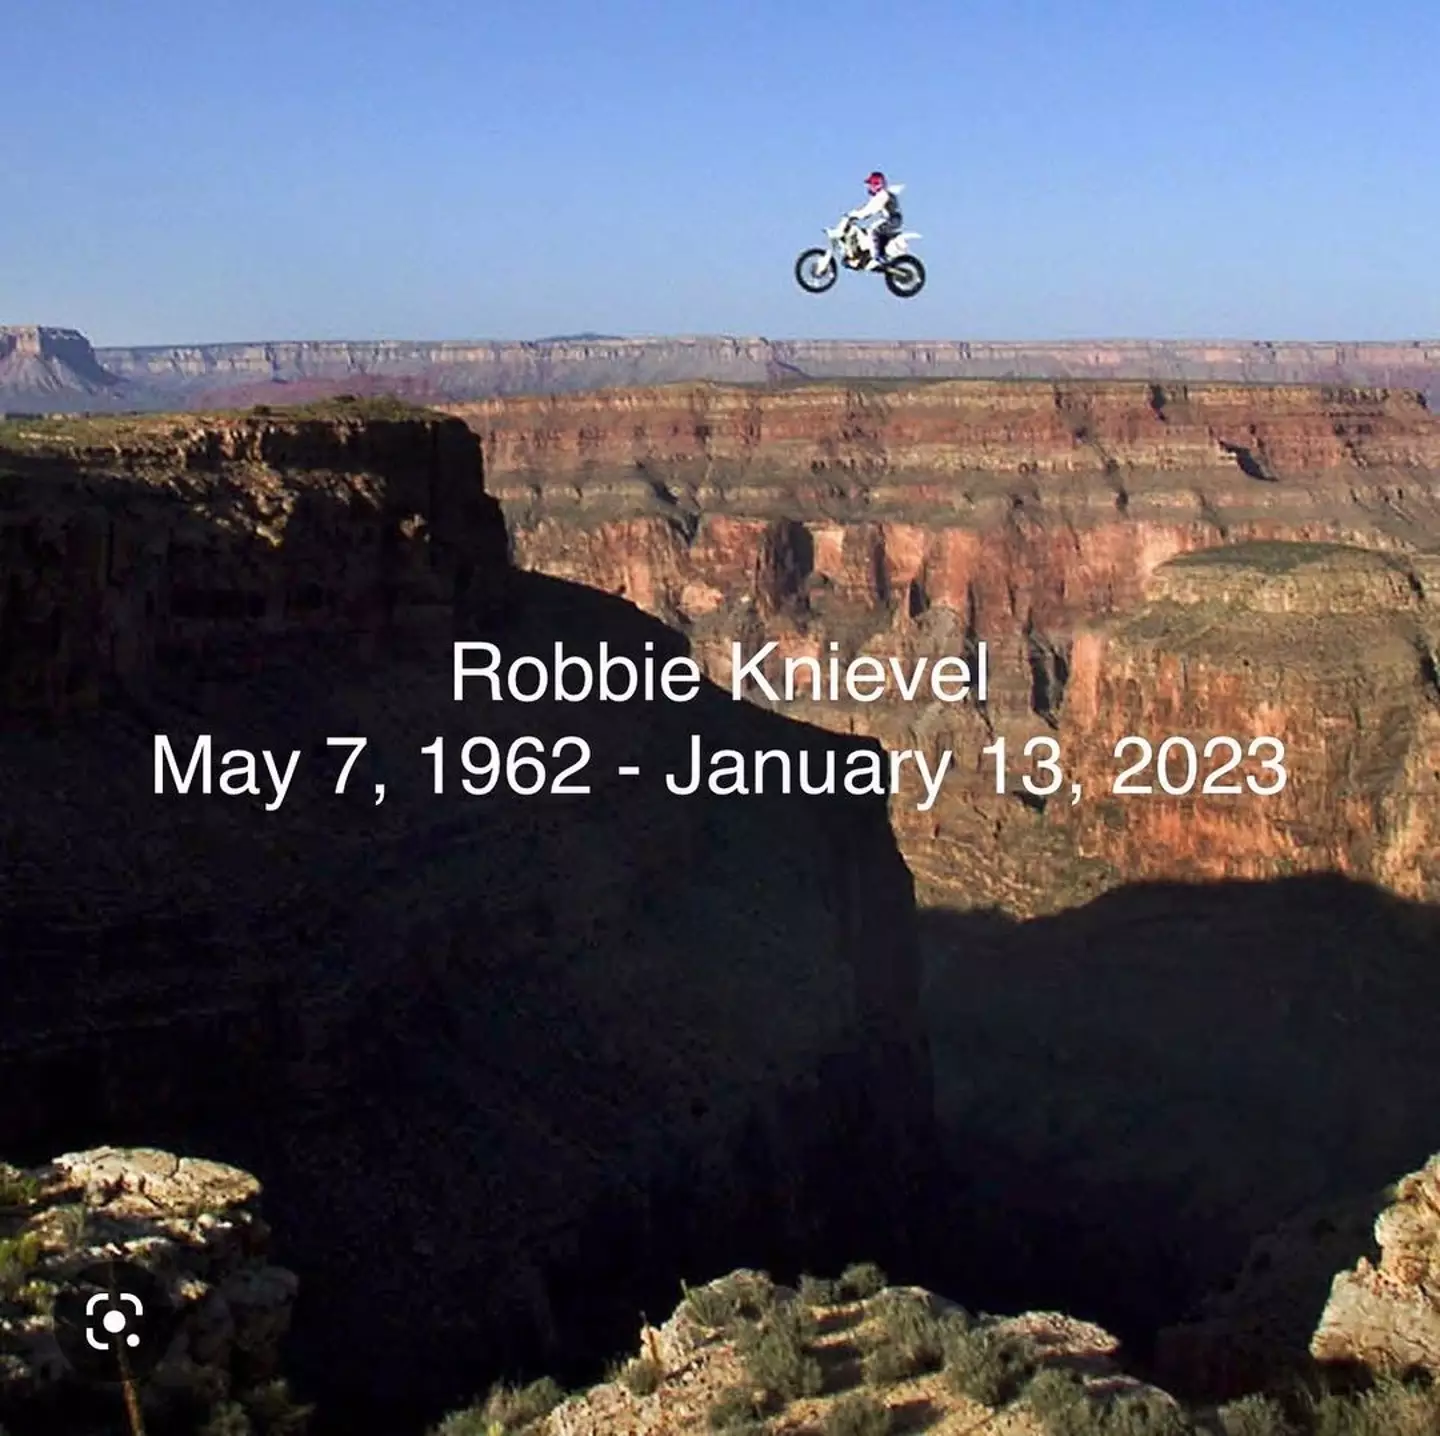 Robbie Knievel passed away aged 60.